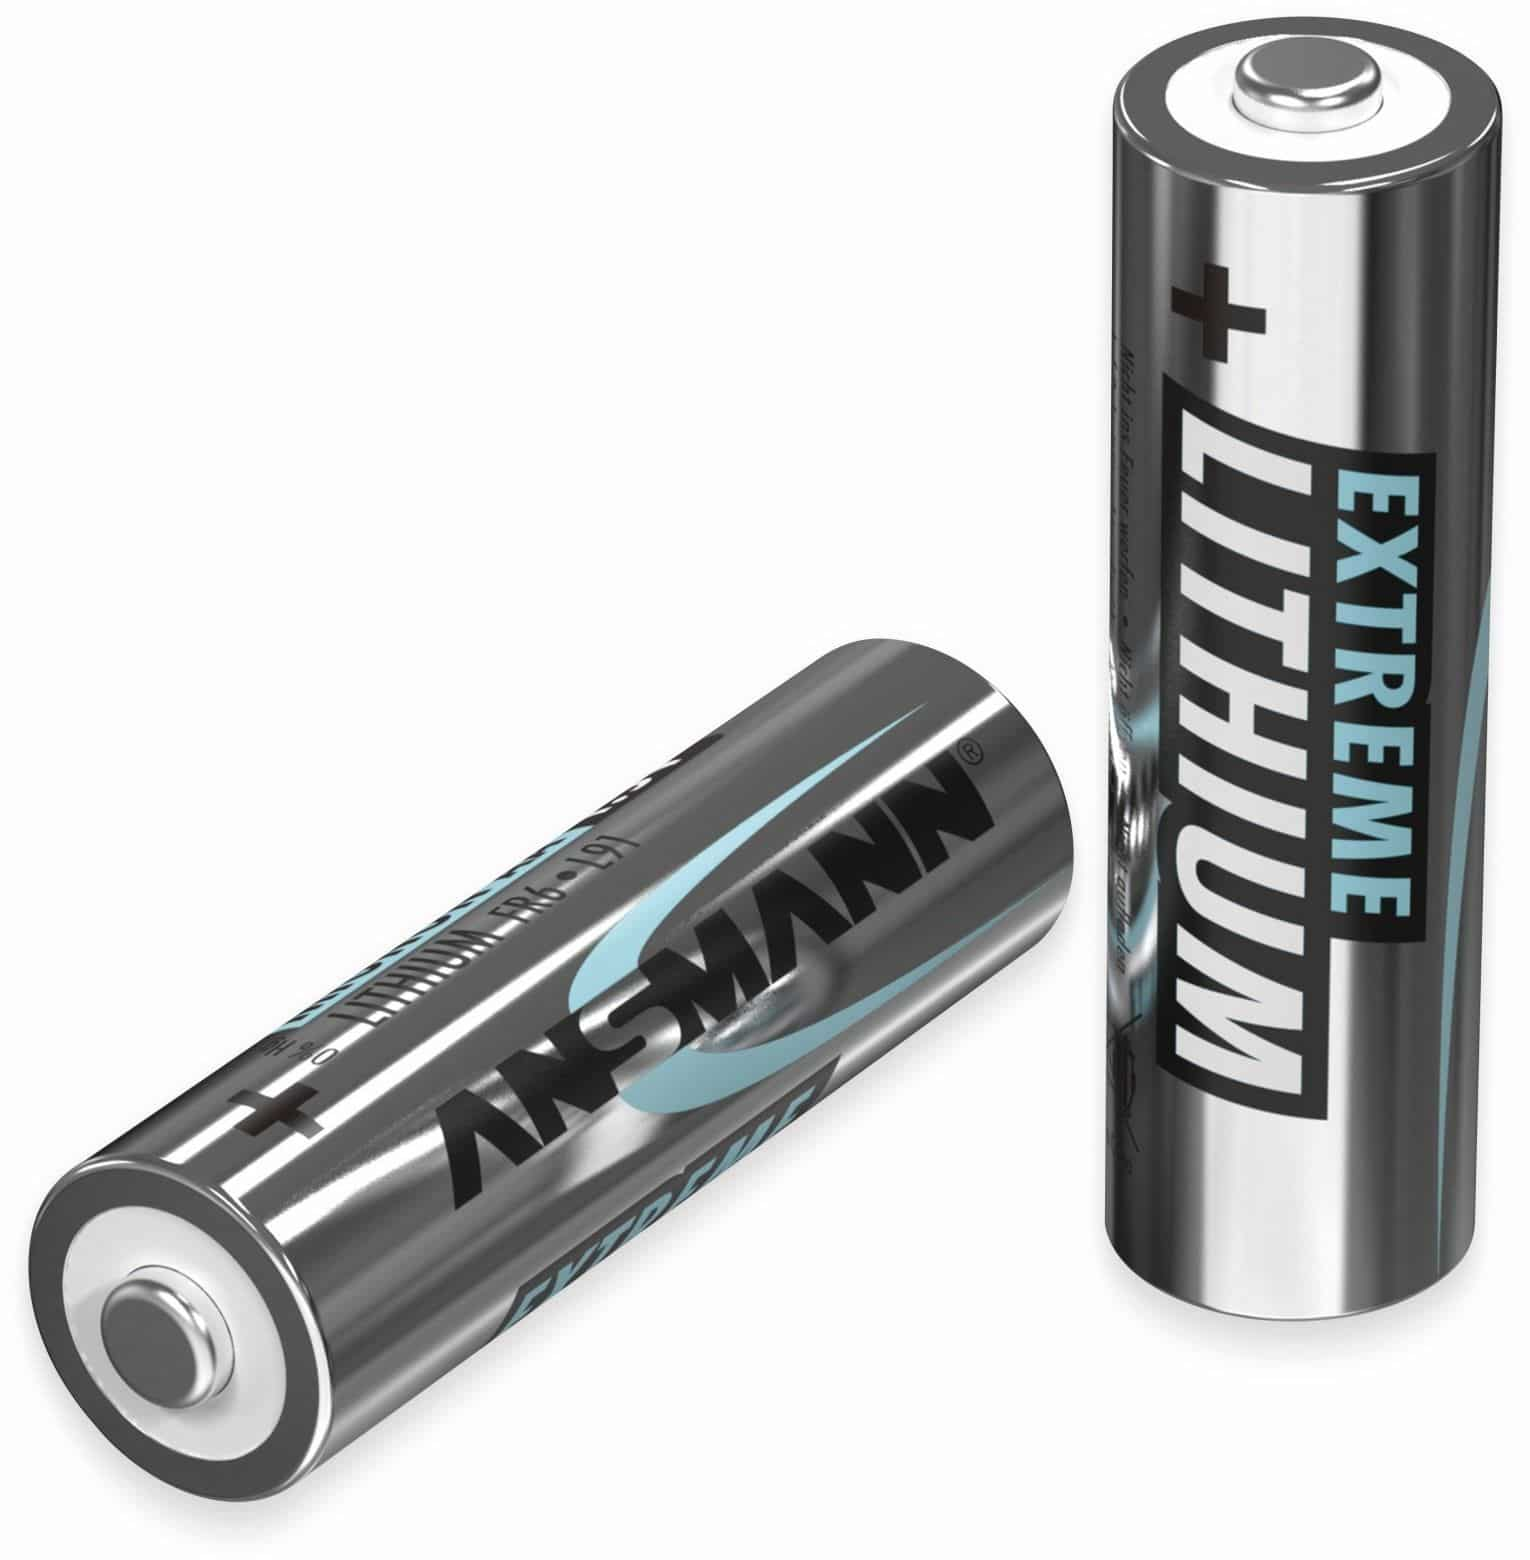 Batterien Strom 8er-Pack Mignon 1512-0012 AA, Batterie ANSMANN Energie / Batterien Lithium ANSMANN